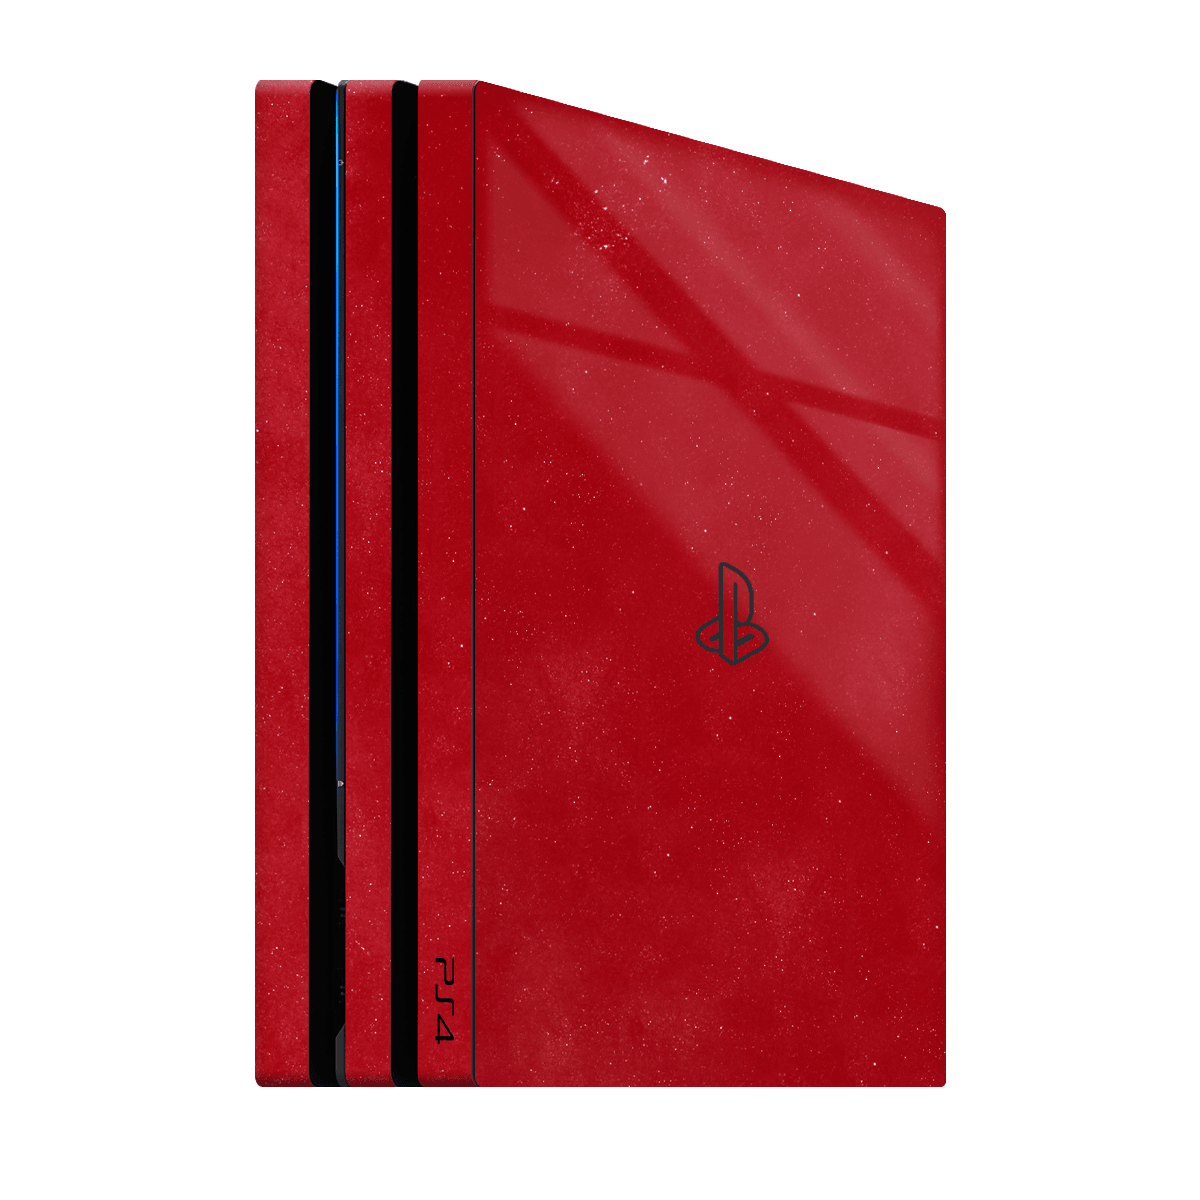 PlayStation 4 Pro Kaplama Vişne Kırmızısı